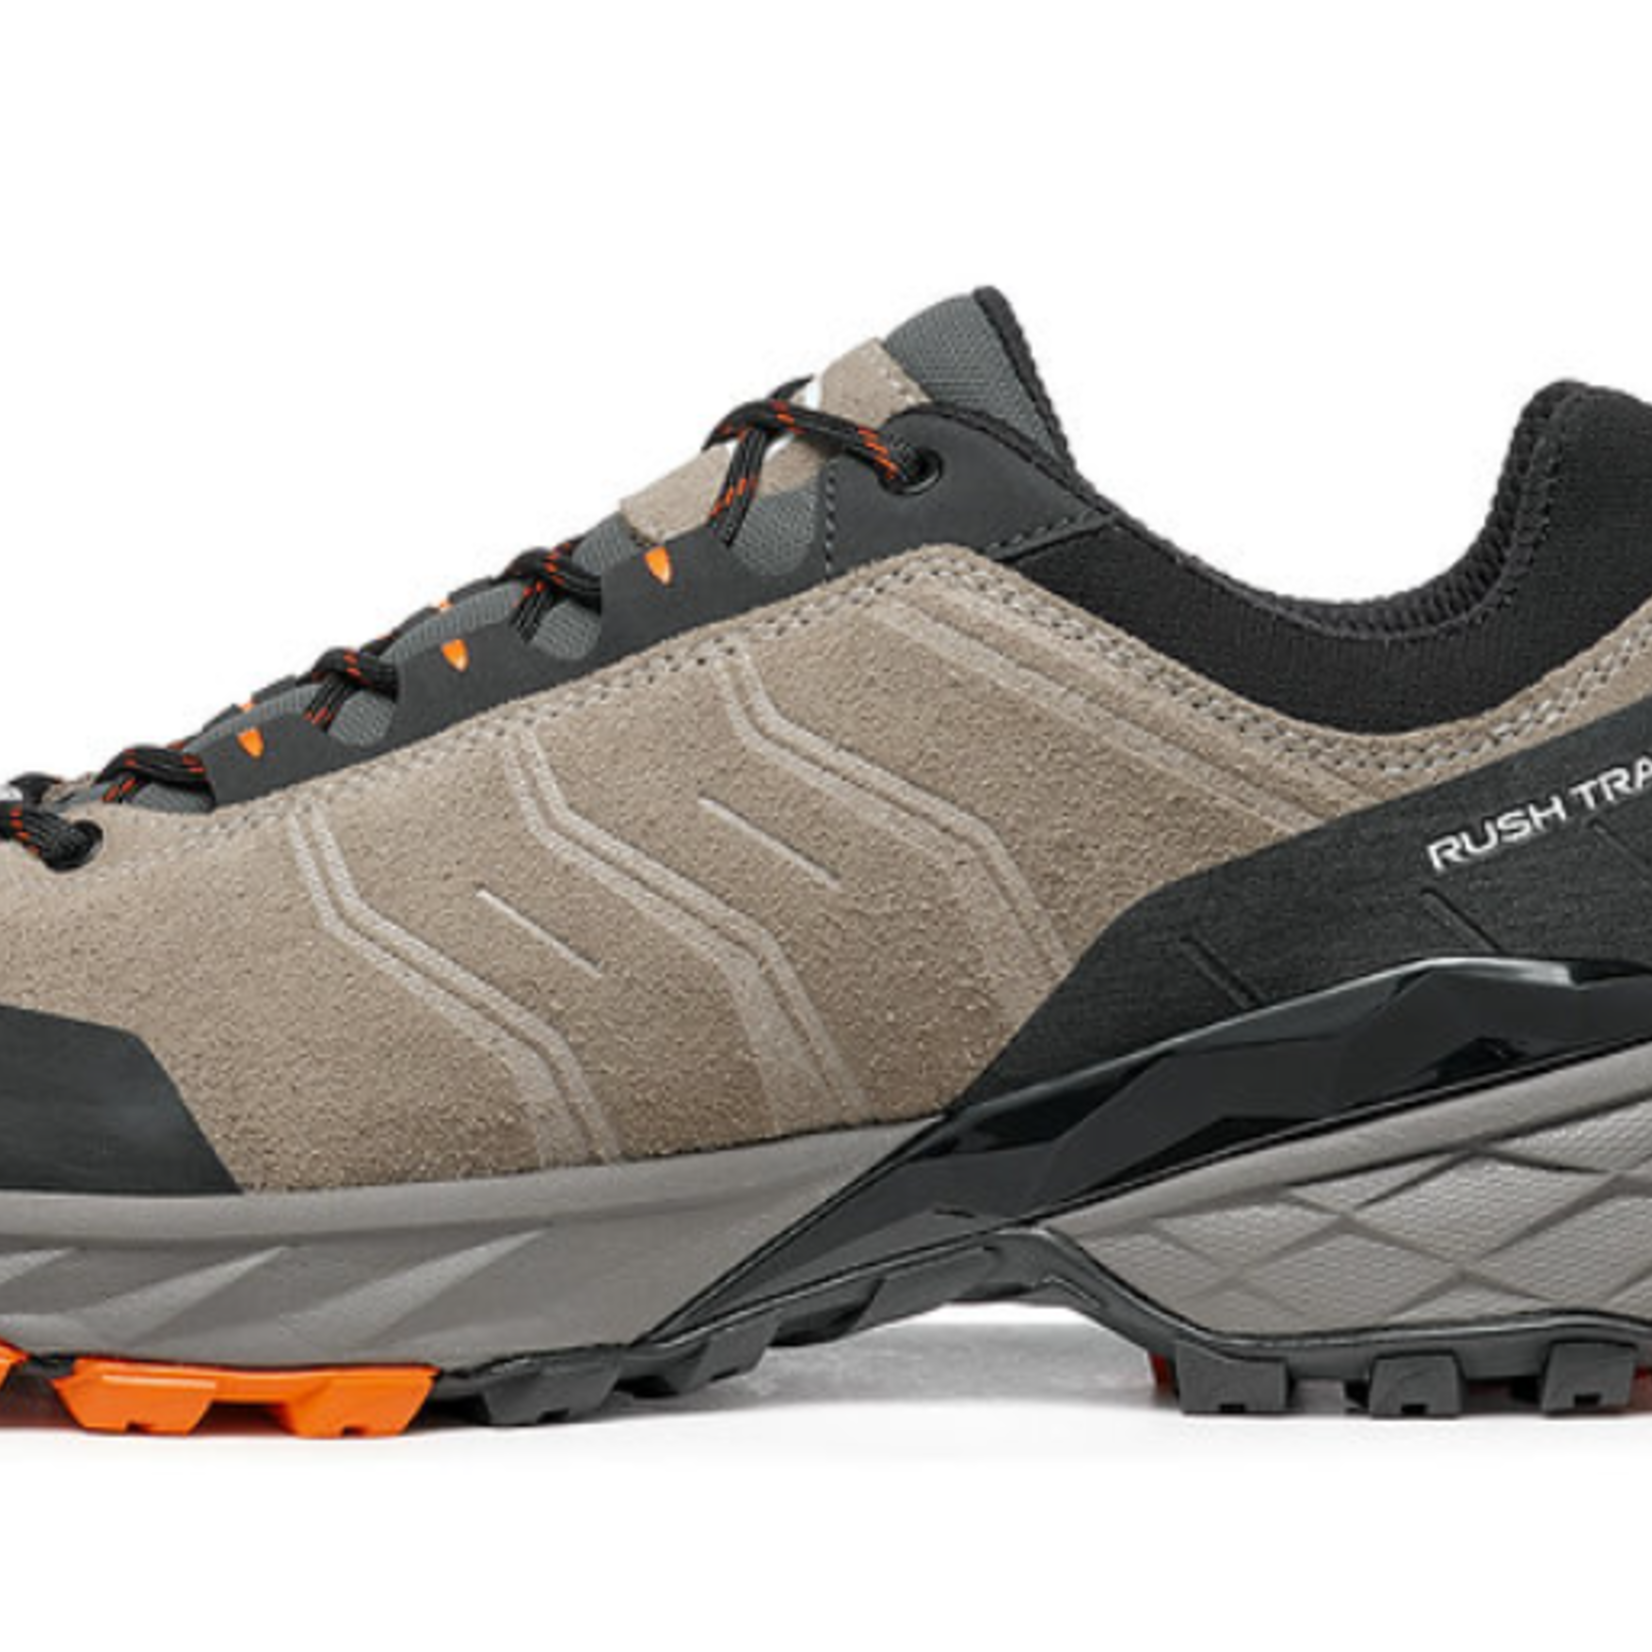 Scarpa Lightweight hiking shoes RUSH TRAIL GTX - Men